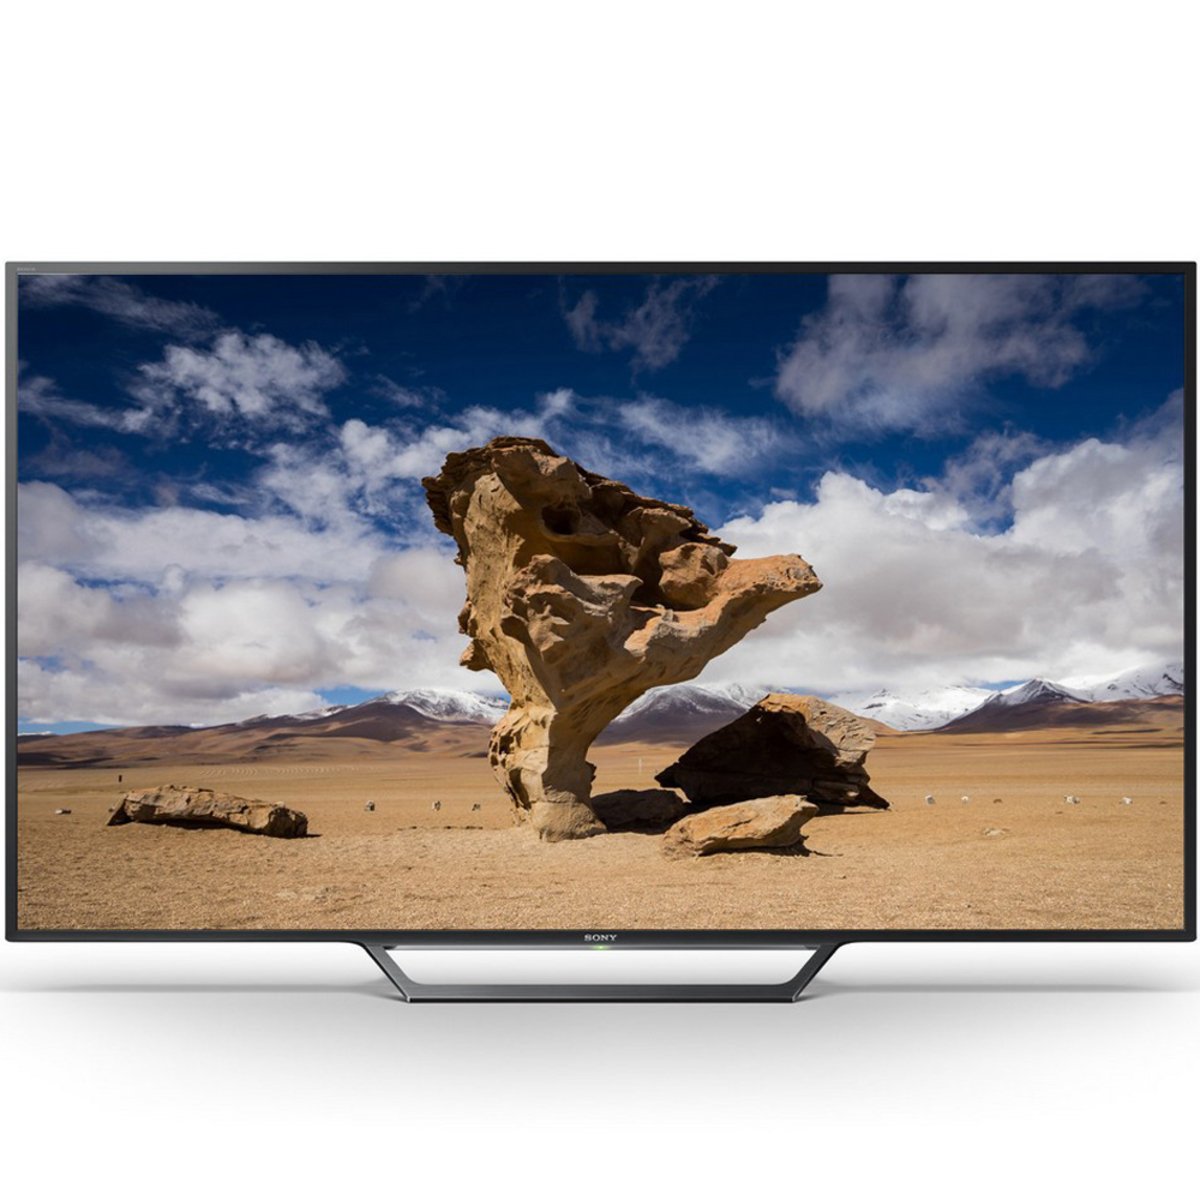 Sony Full HD Smart LED TV KDL48W650D 48inch